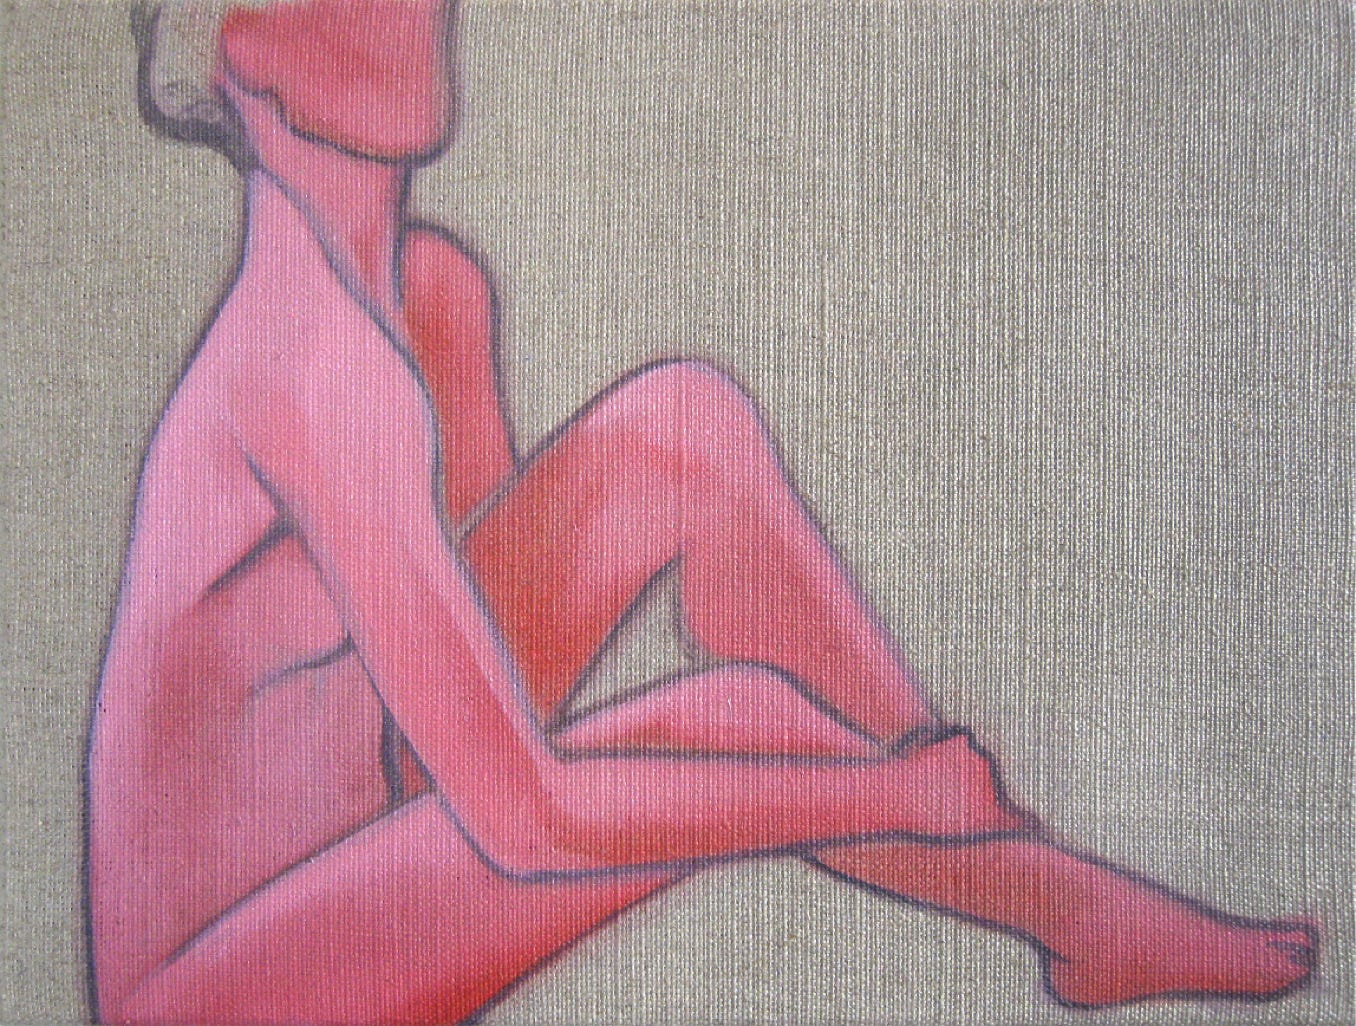 30x40 cm, oil on canvas, 2015